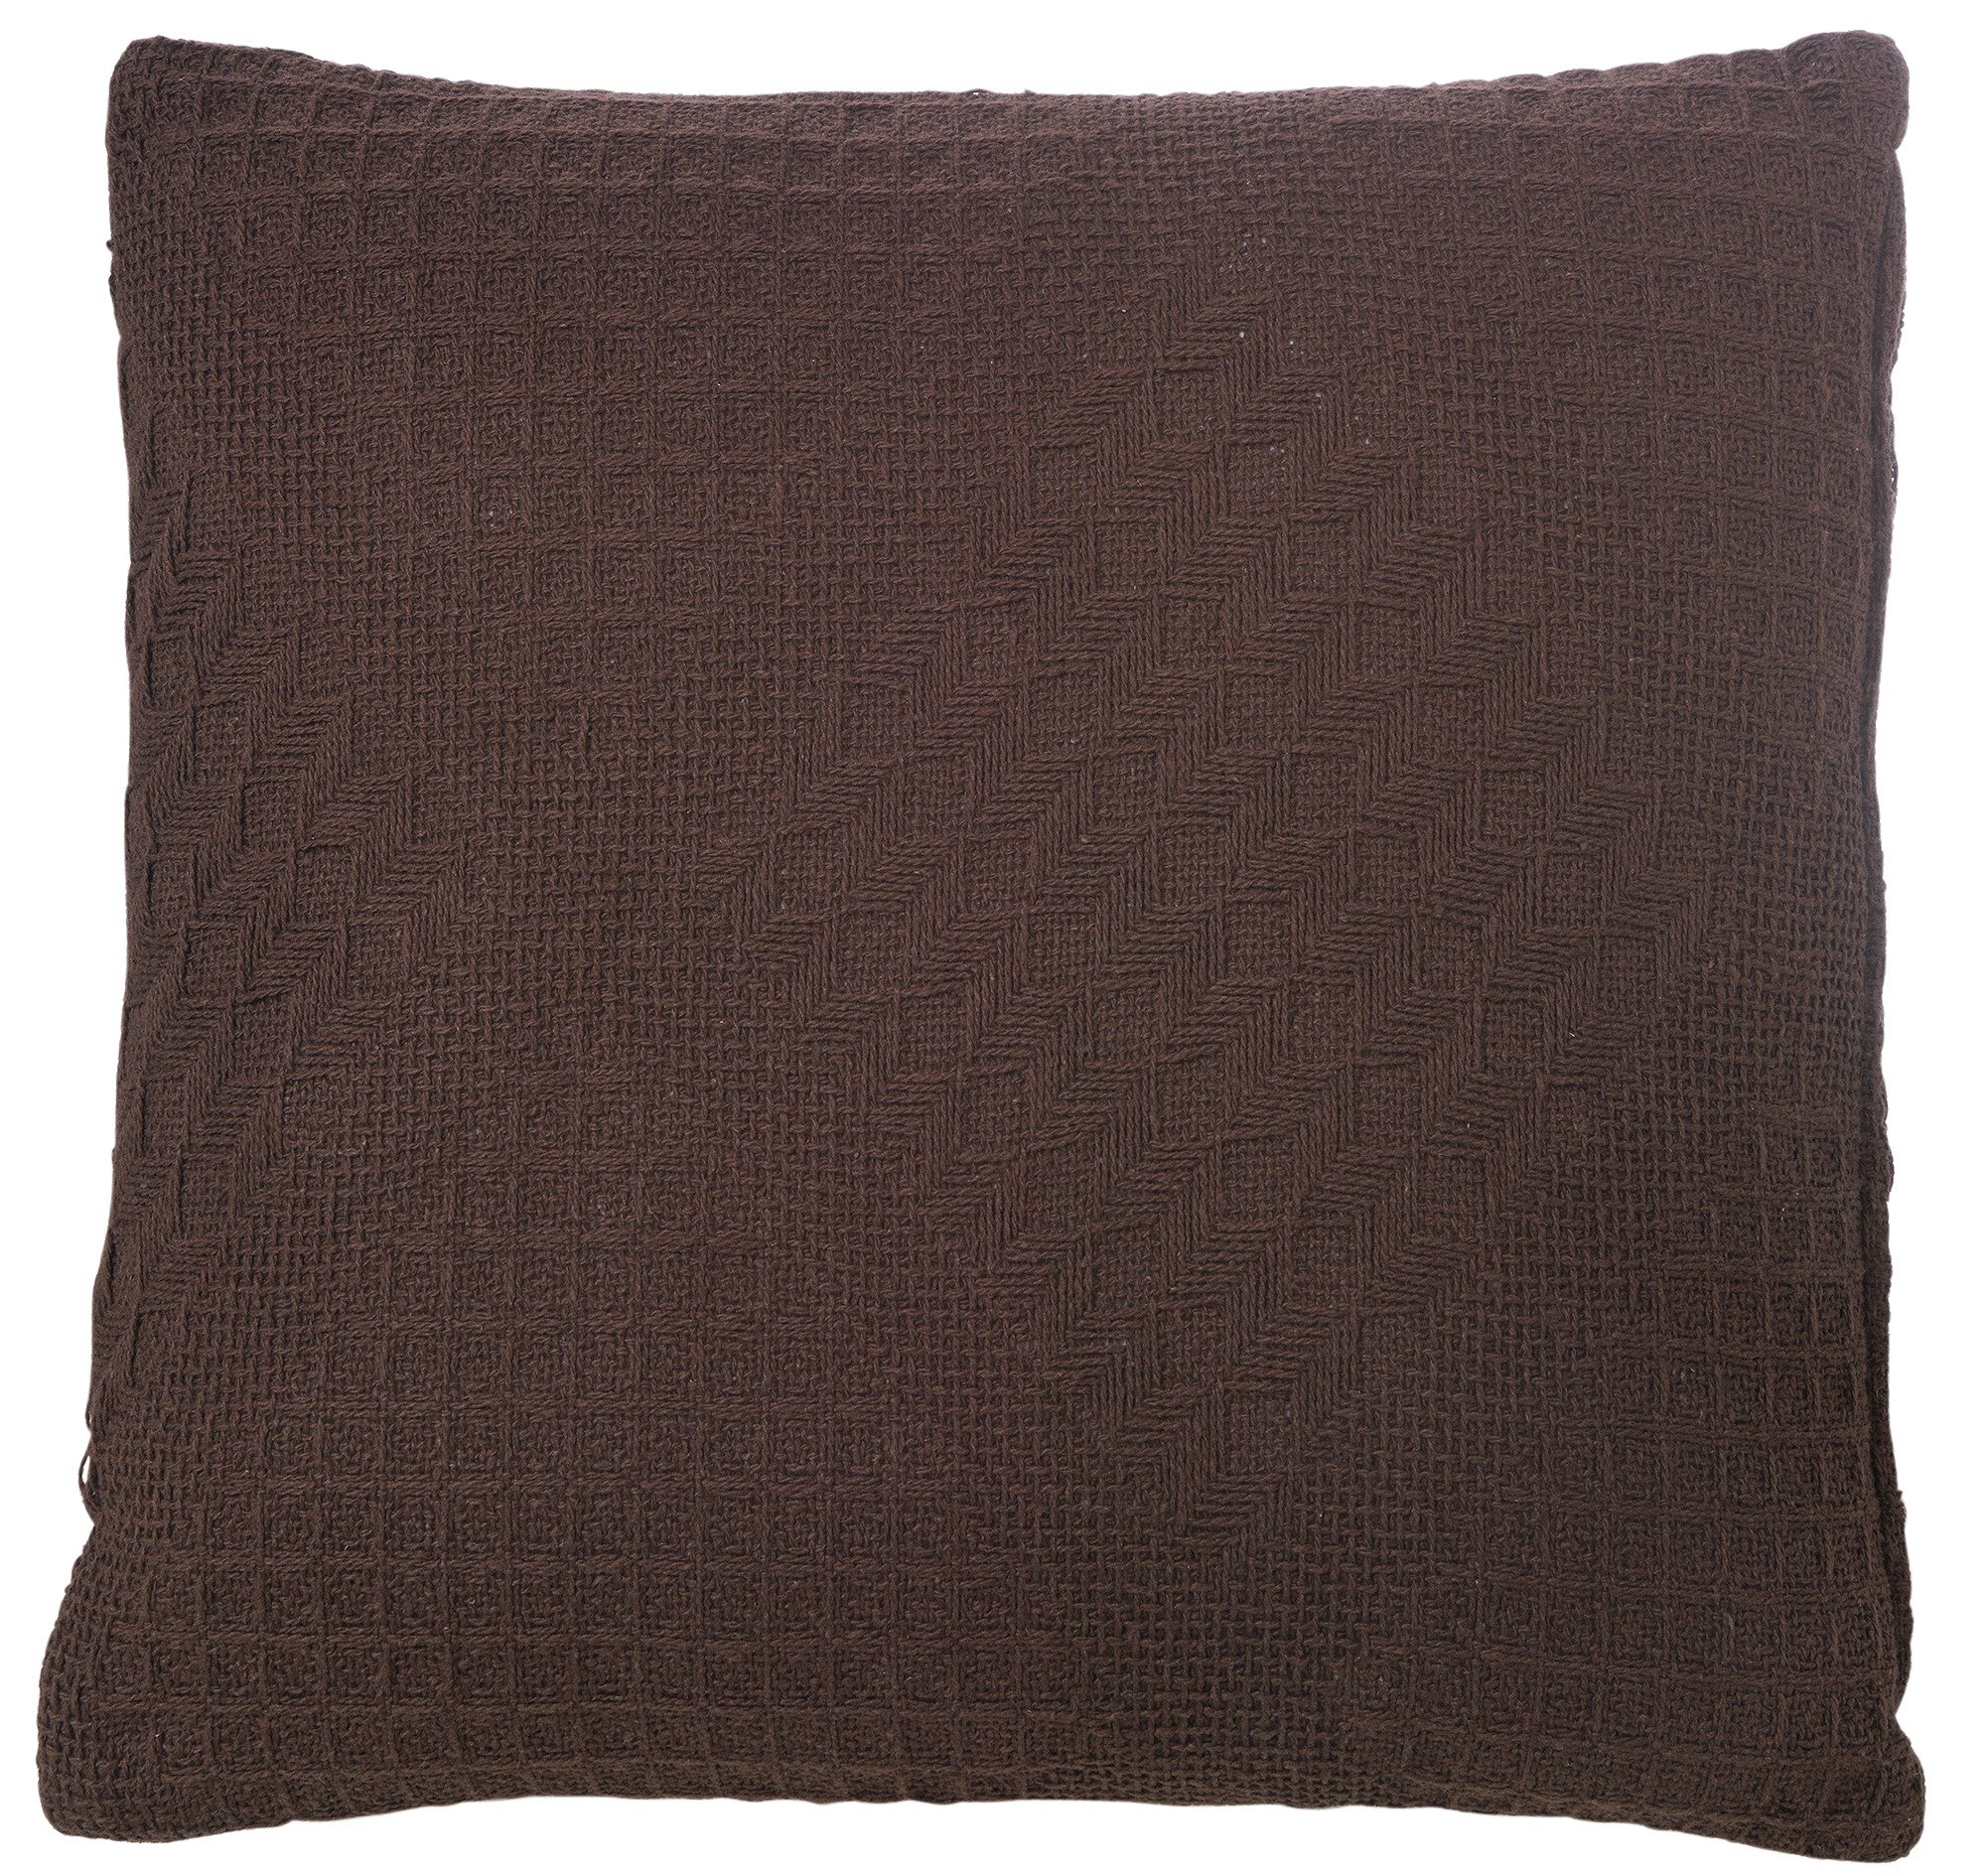 Argos Home Basic Cushion - Chocolate